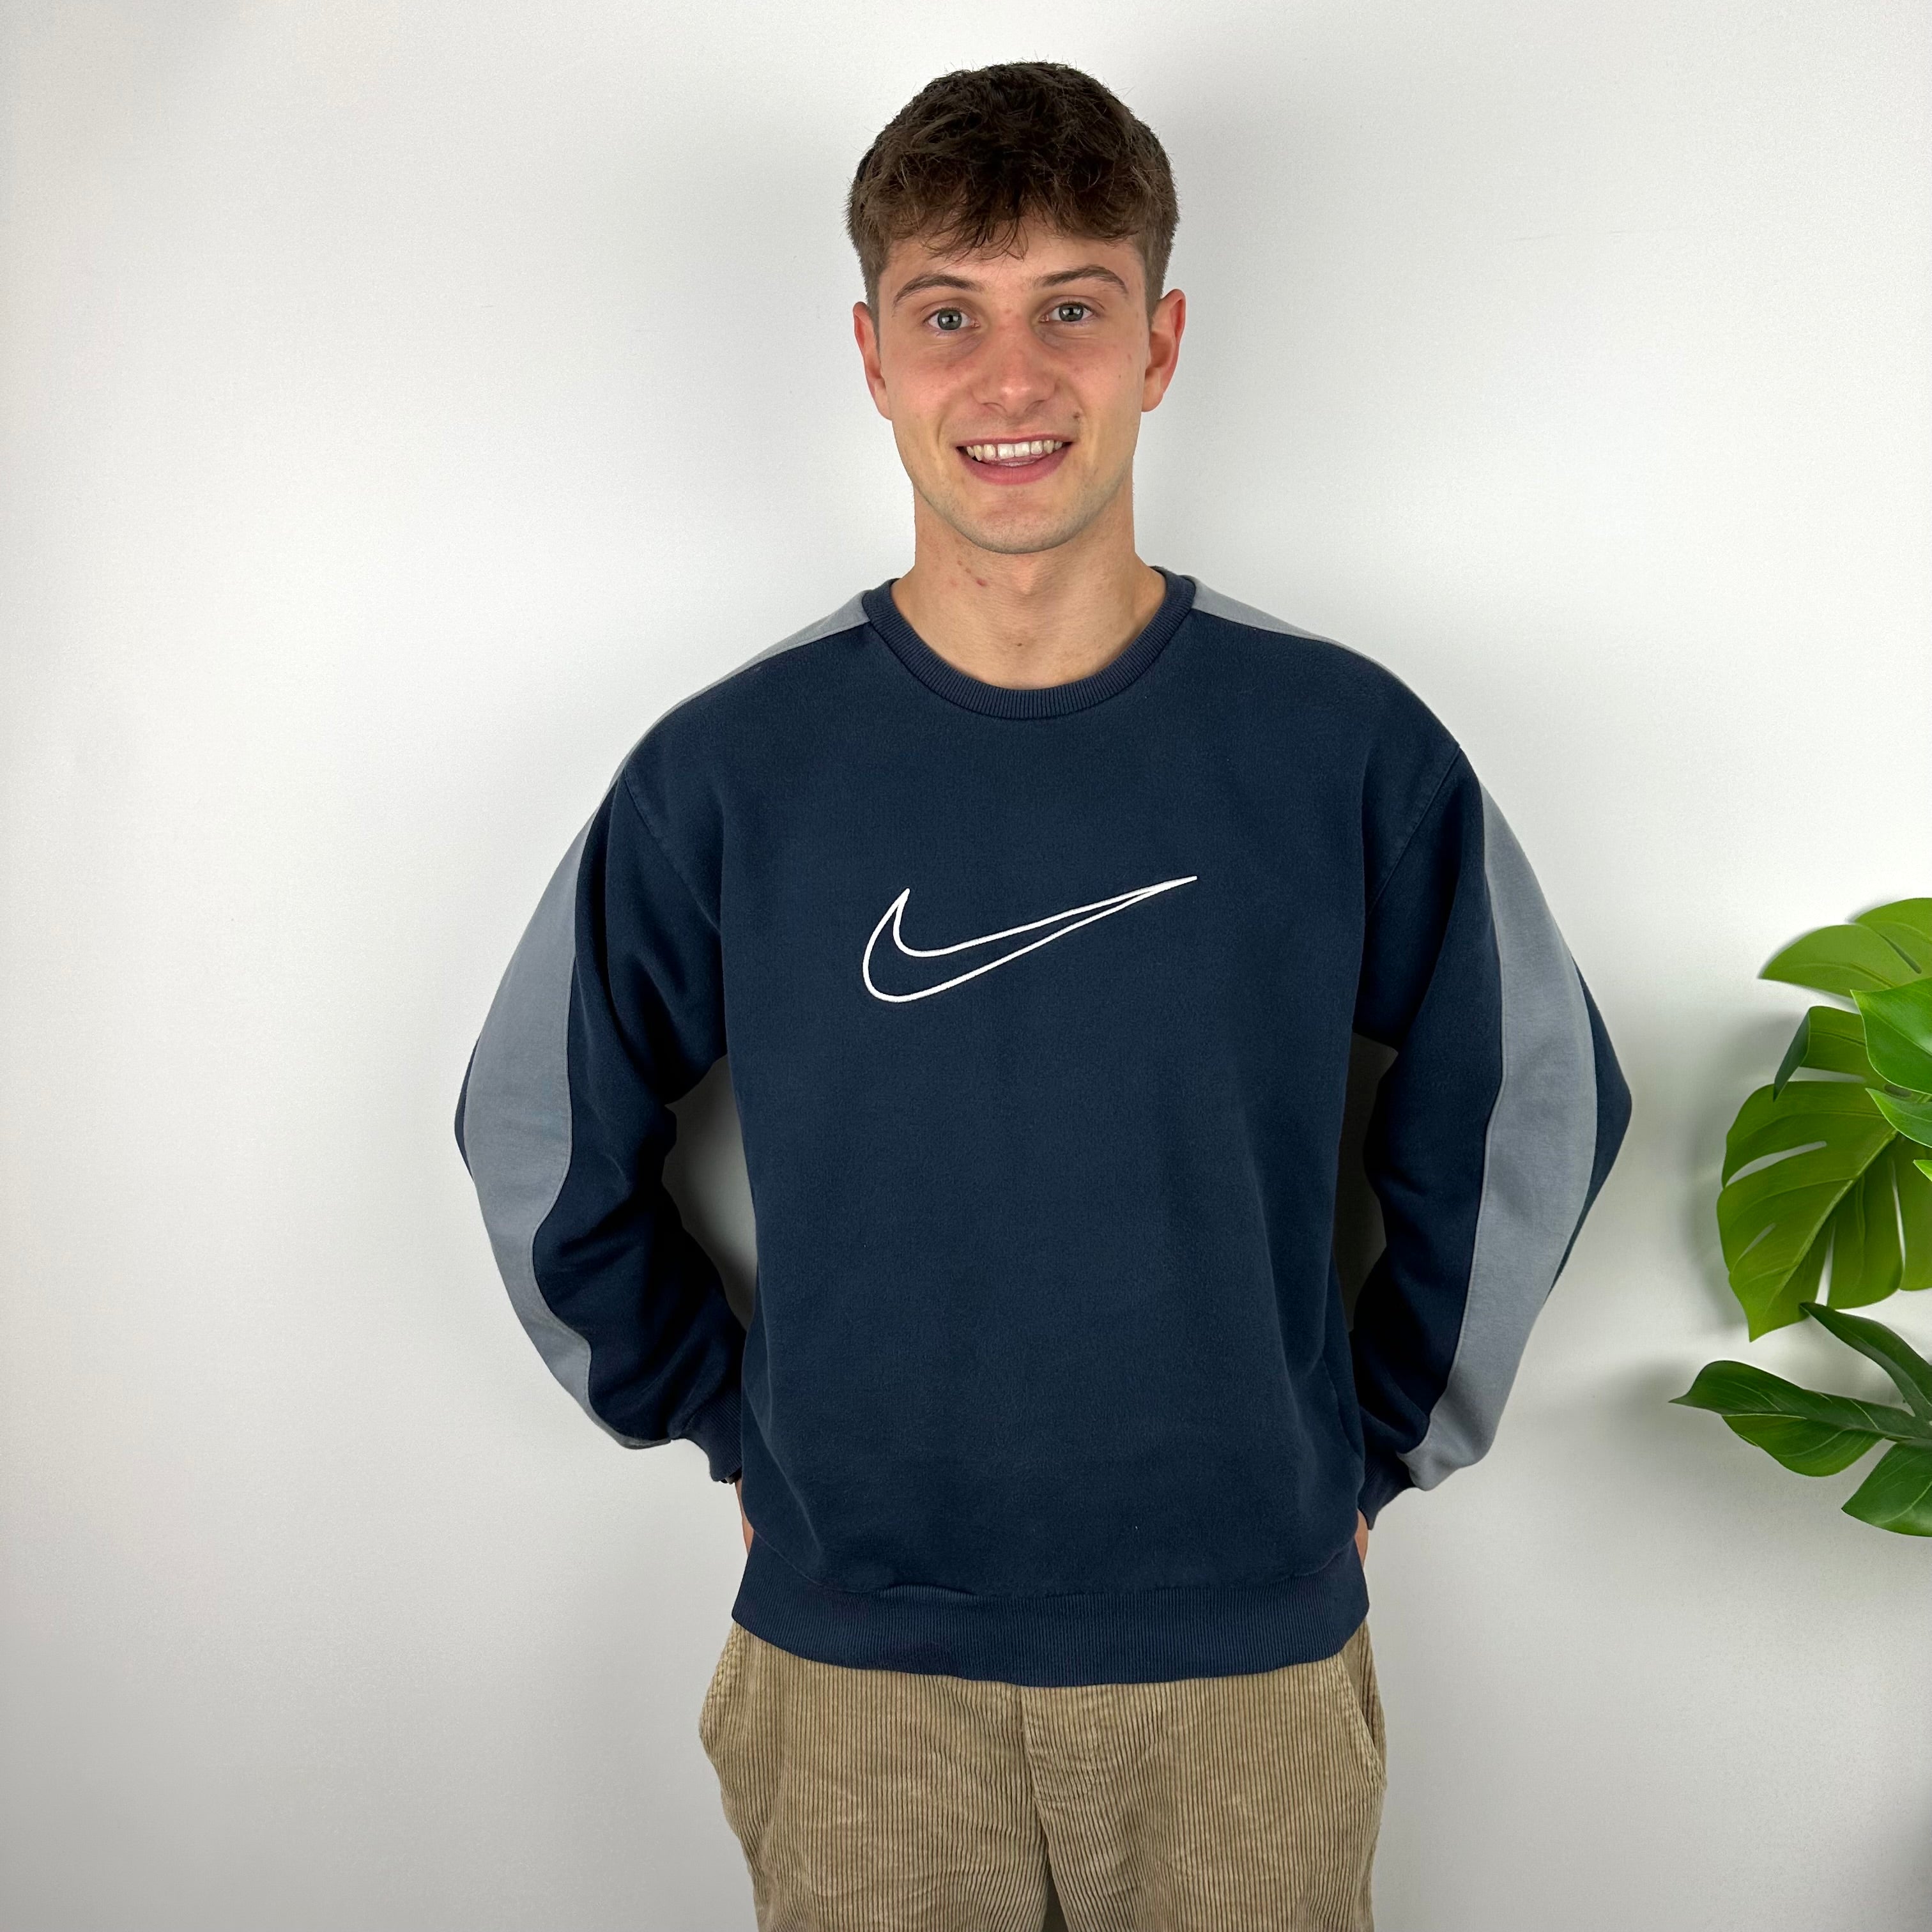 Nike Navy Embroidered Swoosh Sweatshirt (L)